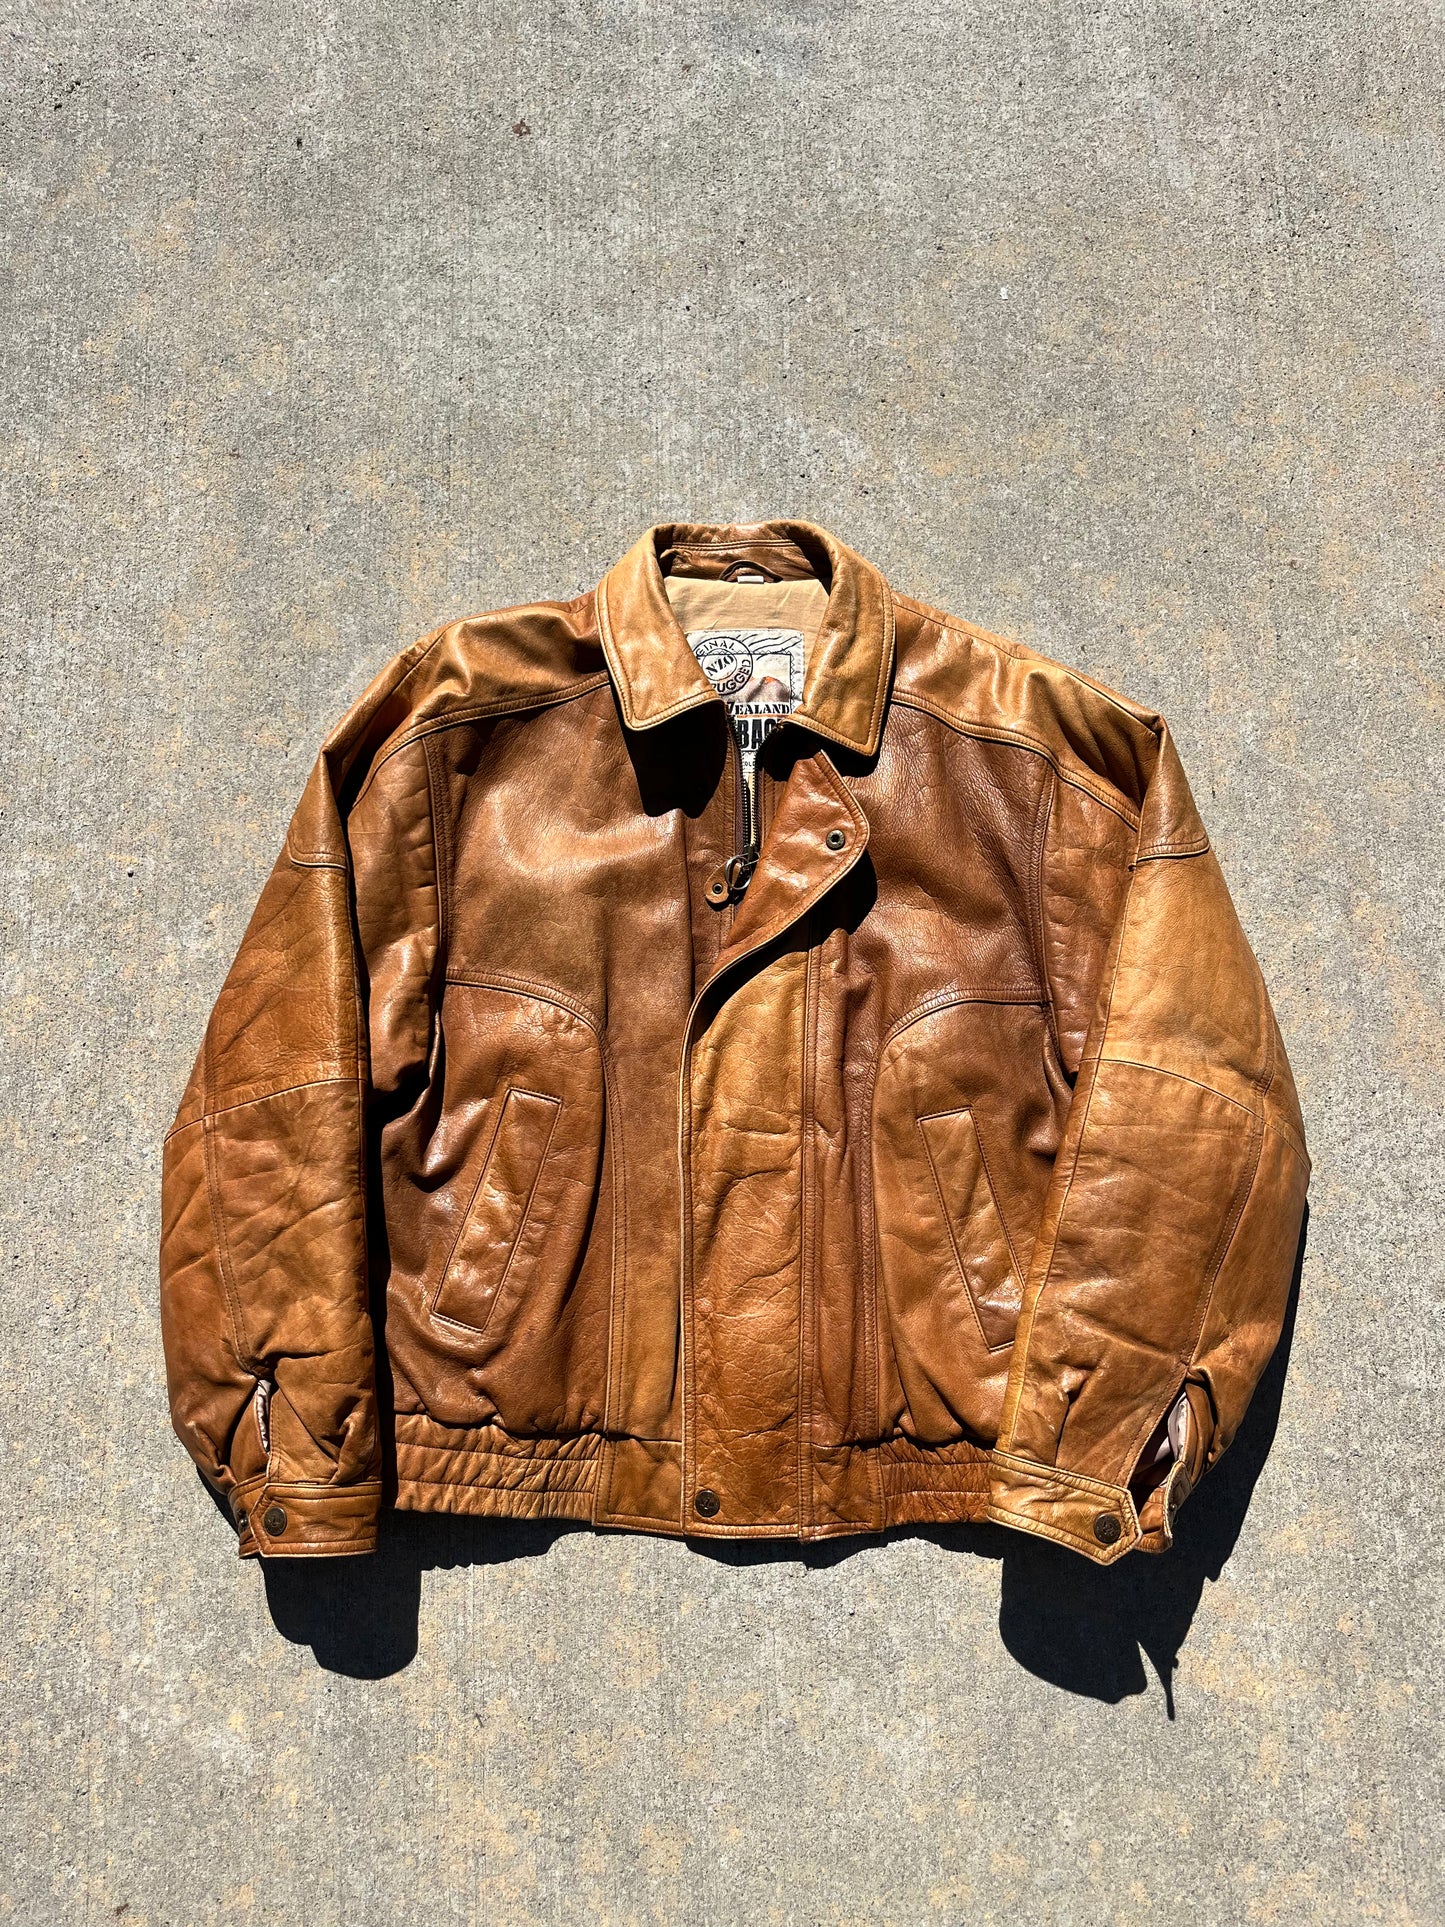 Australian Leather Jacket